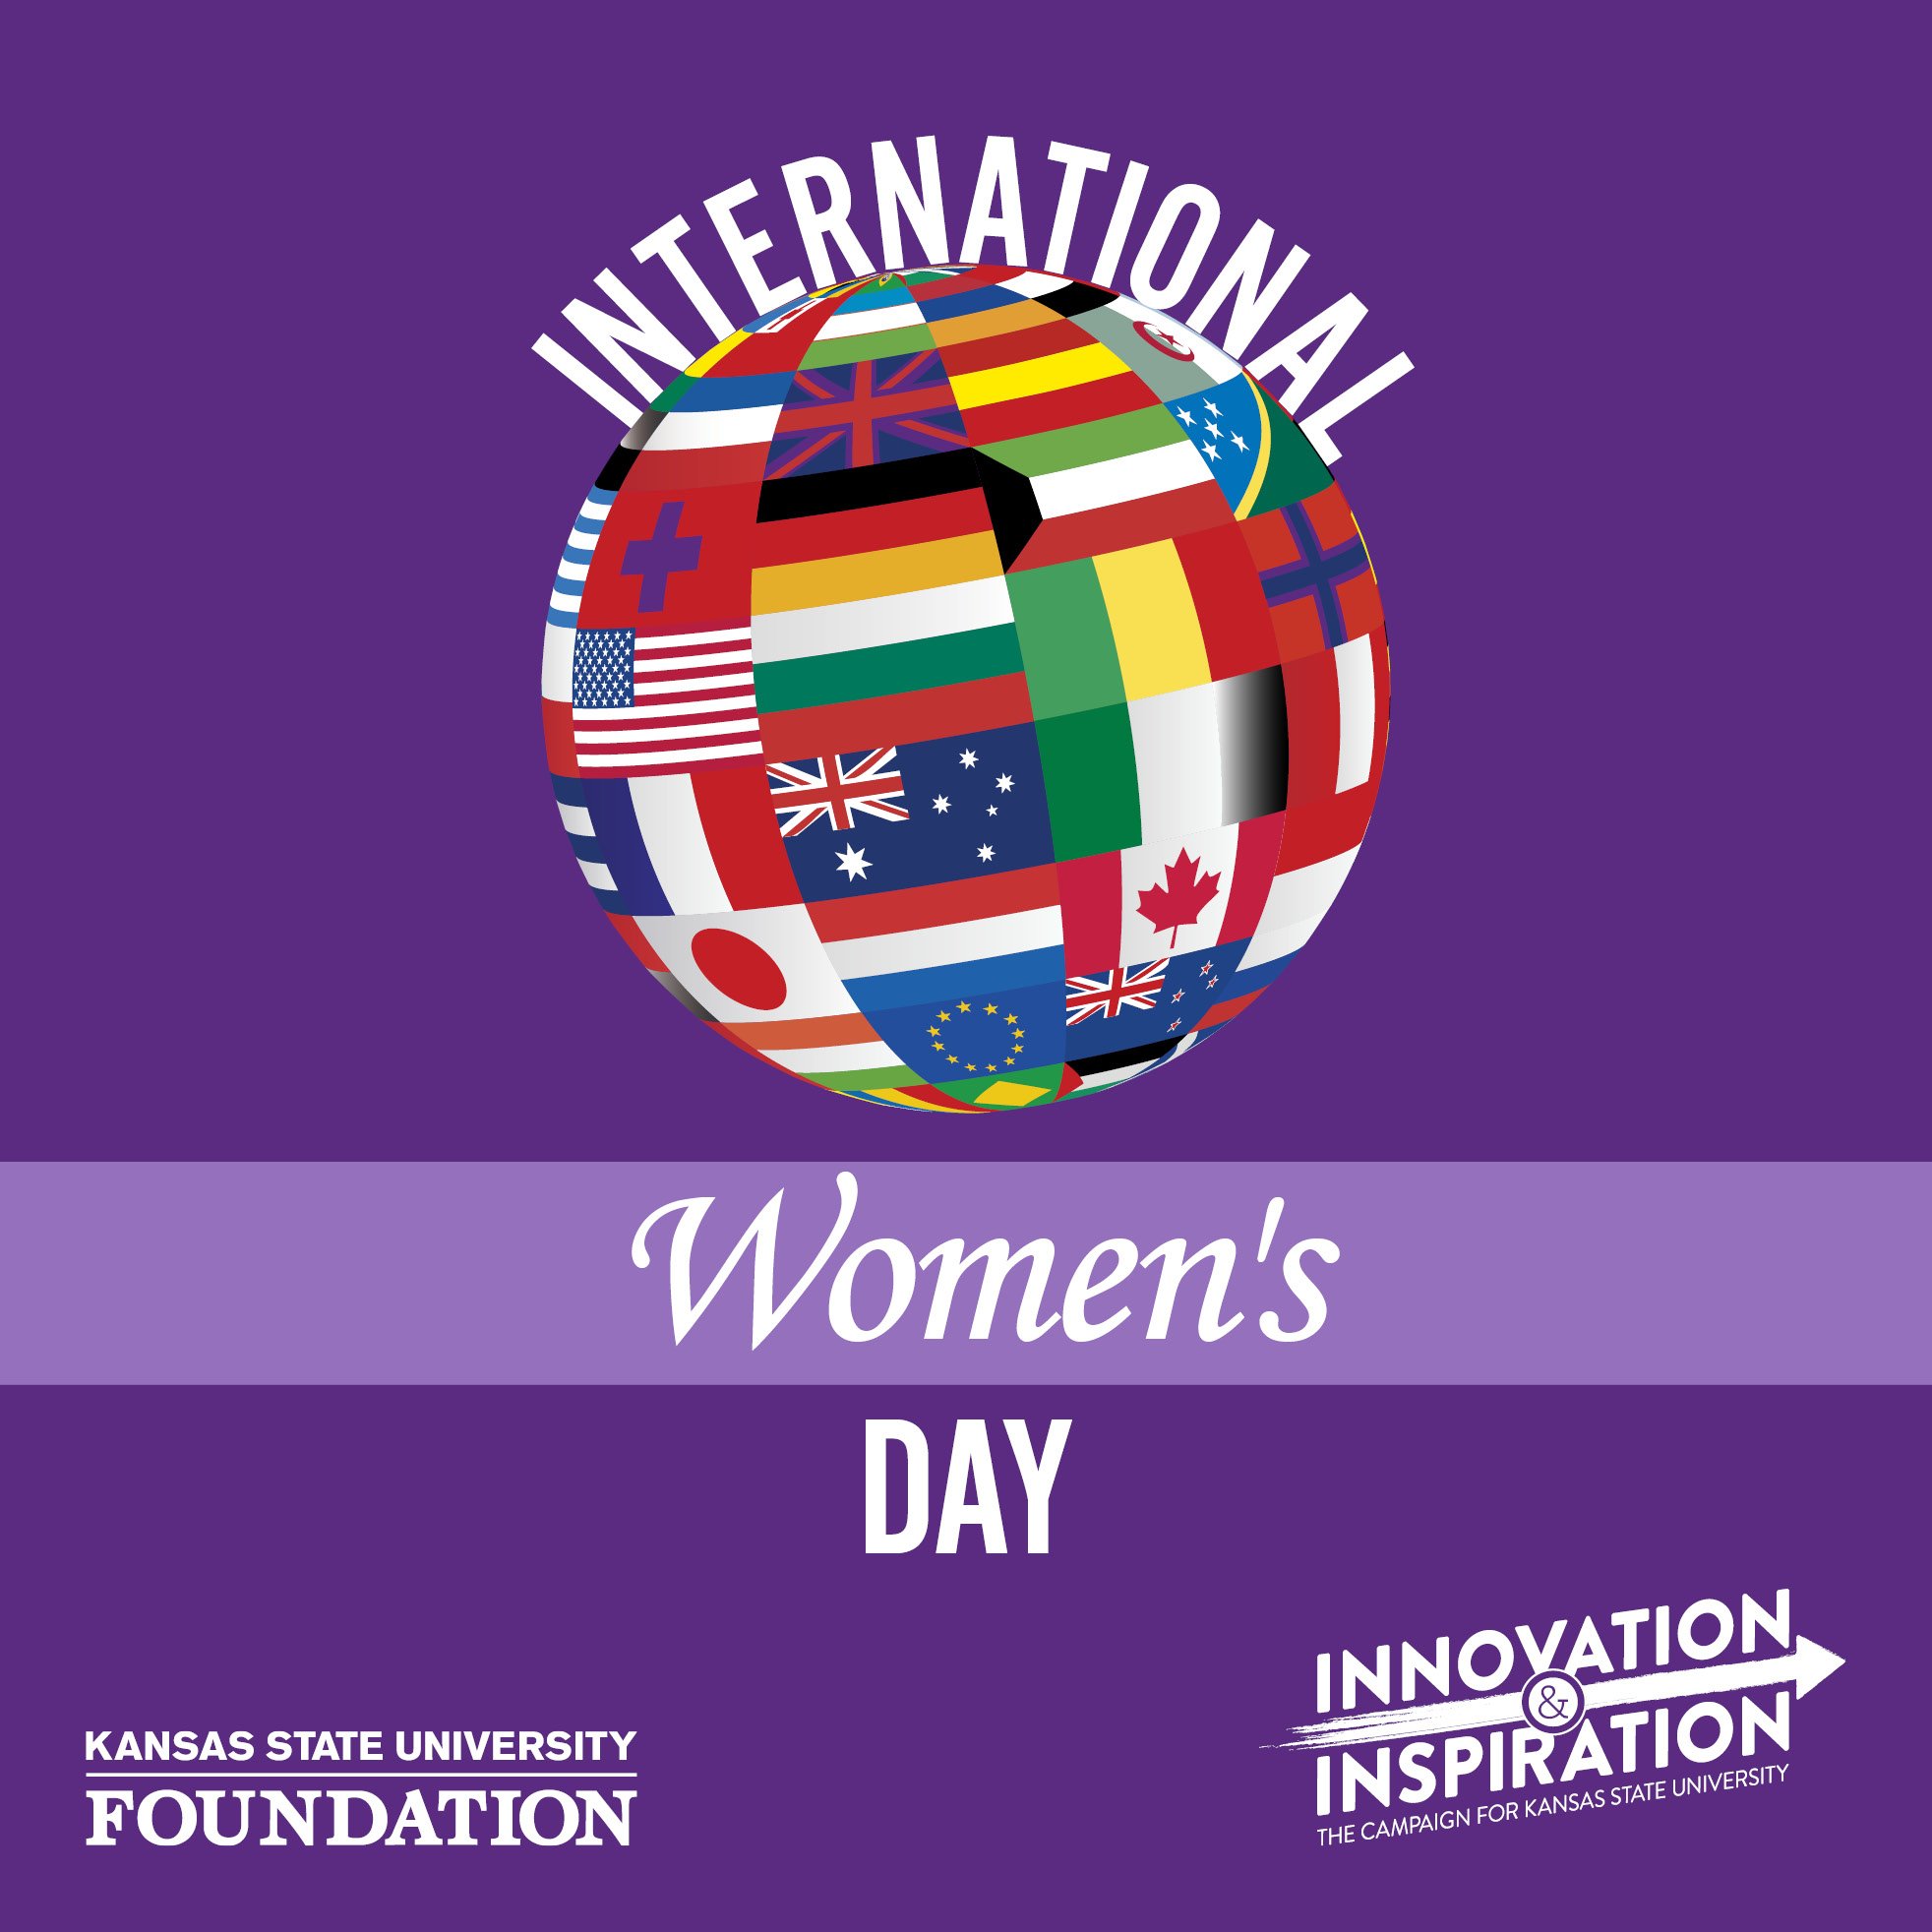 Ksu Foundation On Twitter Today We Celebrate The Achievements Of Women Around The World Happy